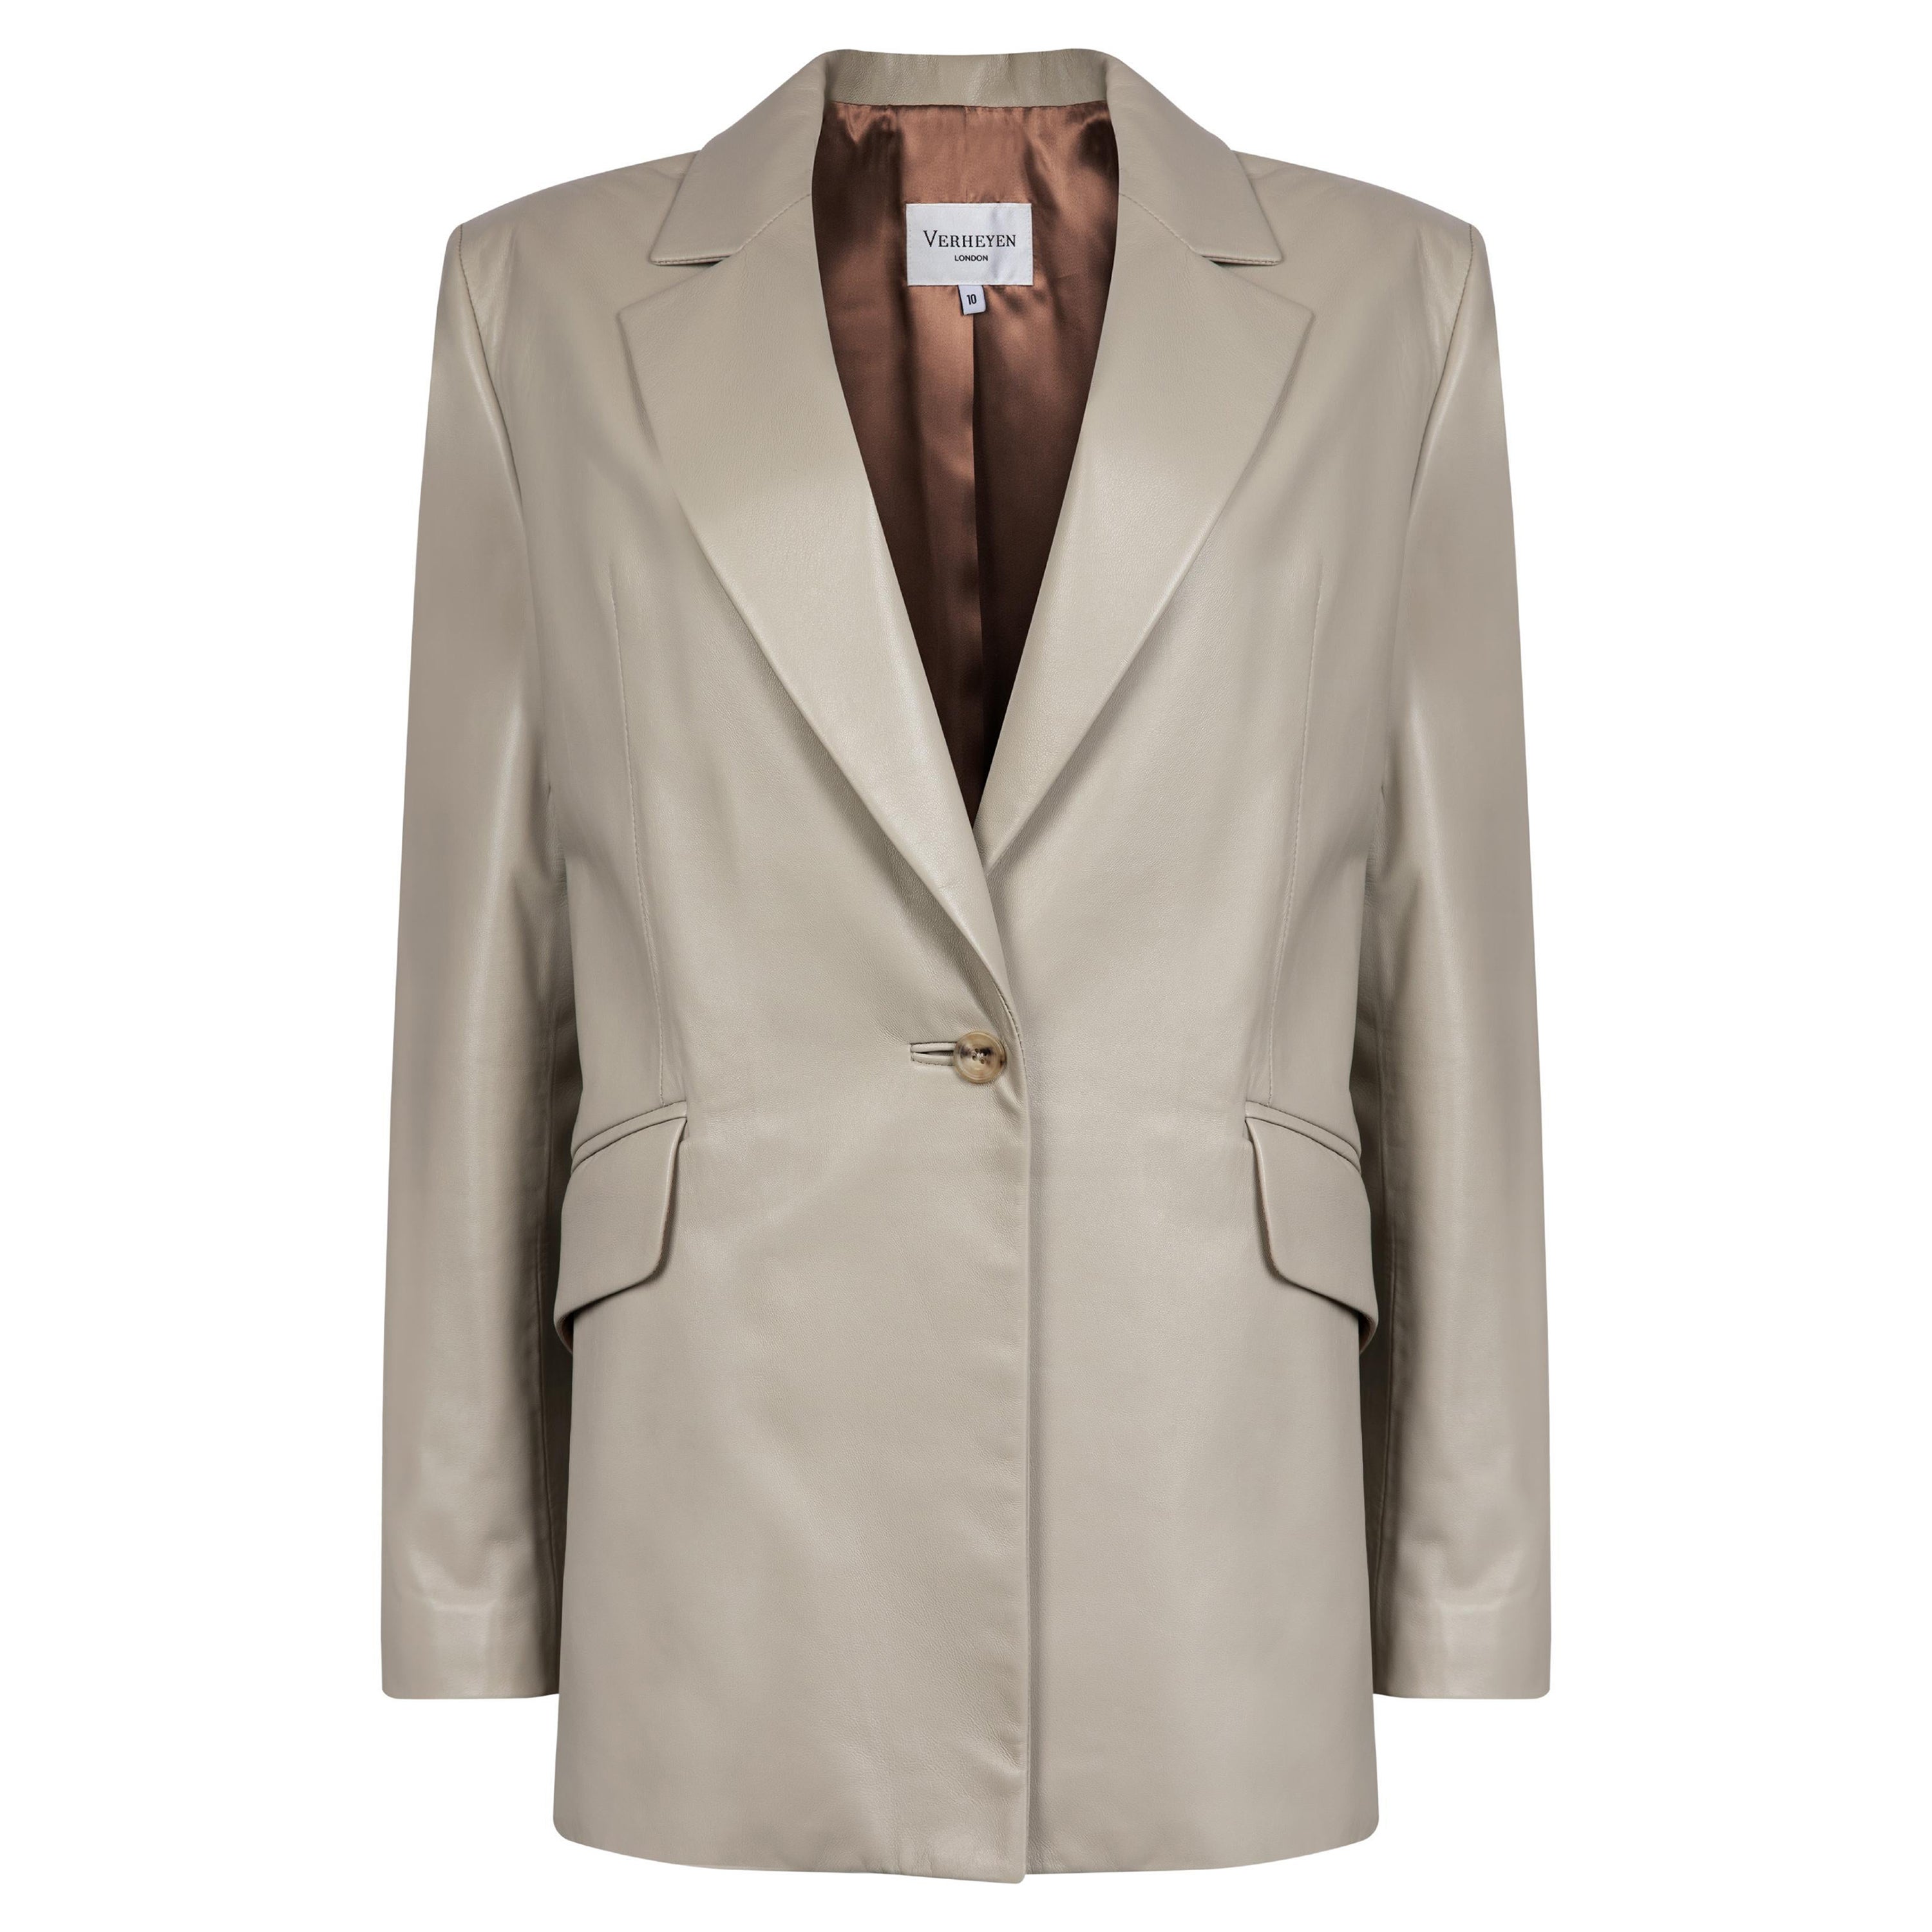 Verheyen London Chesca Oversize Blazer in Stone Grey Leather, Size 10 For Sale